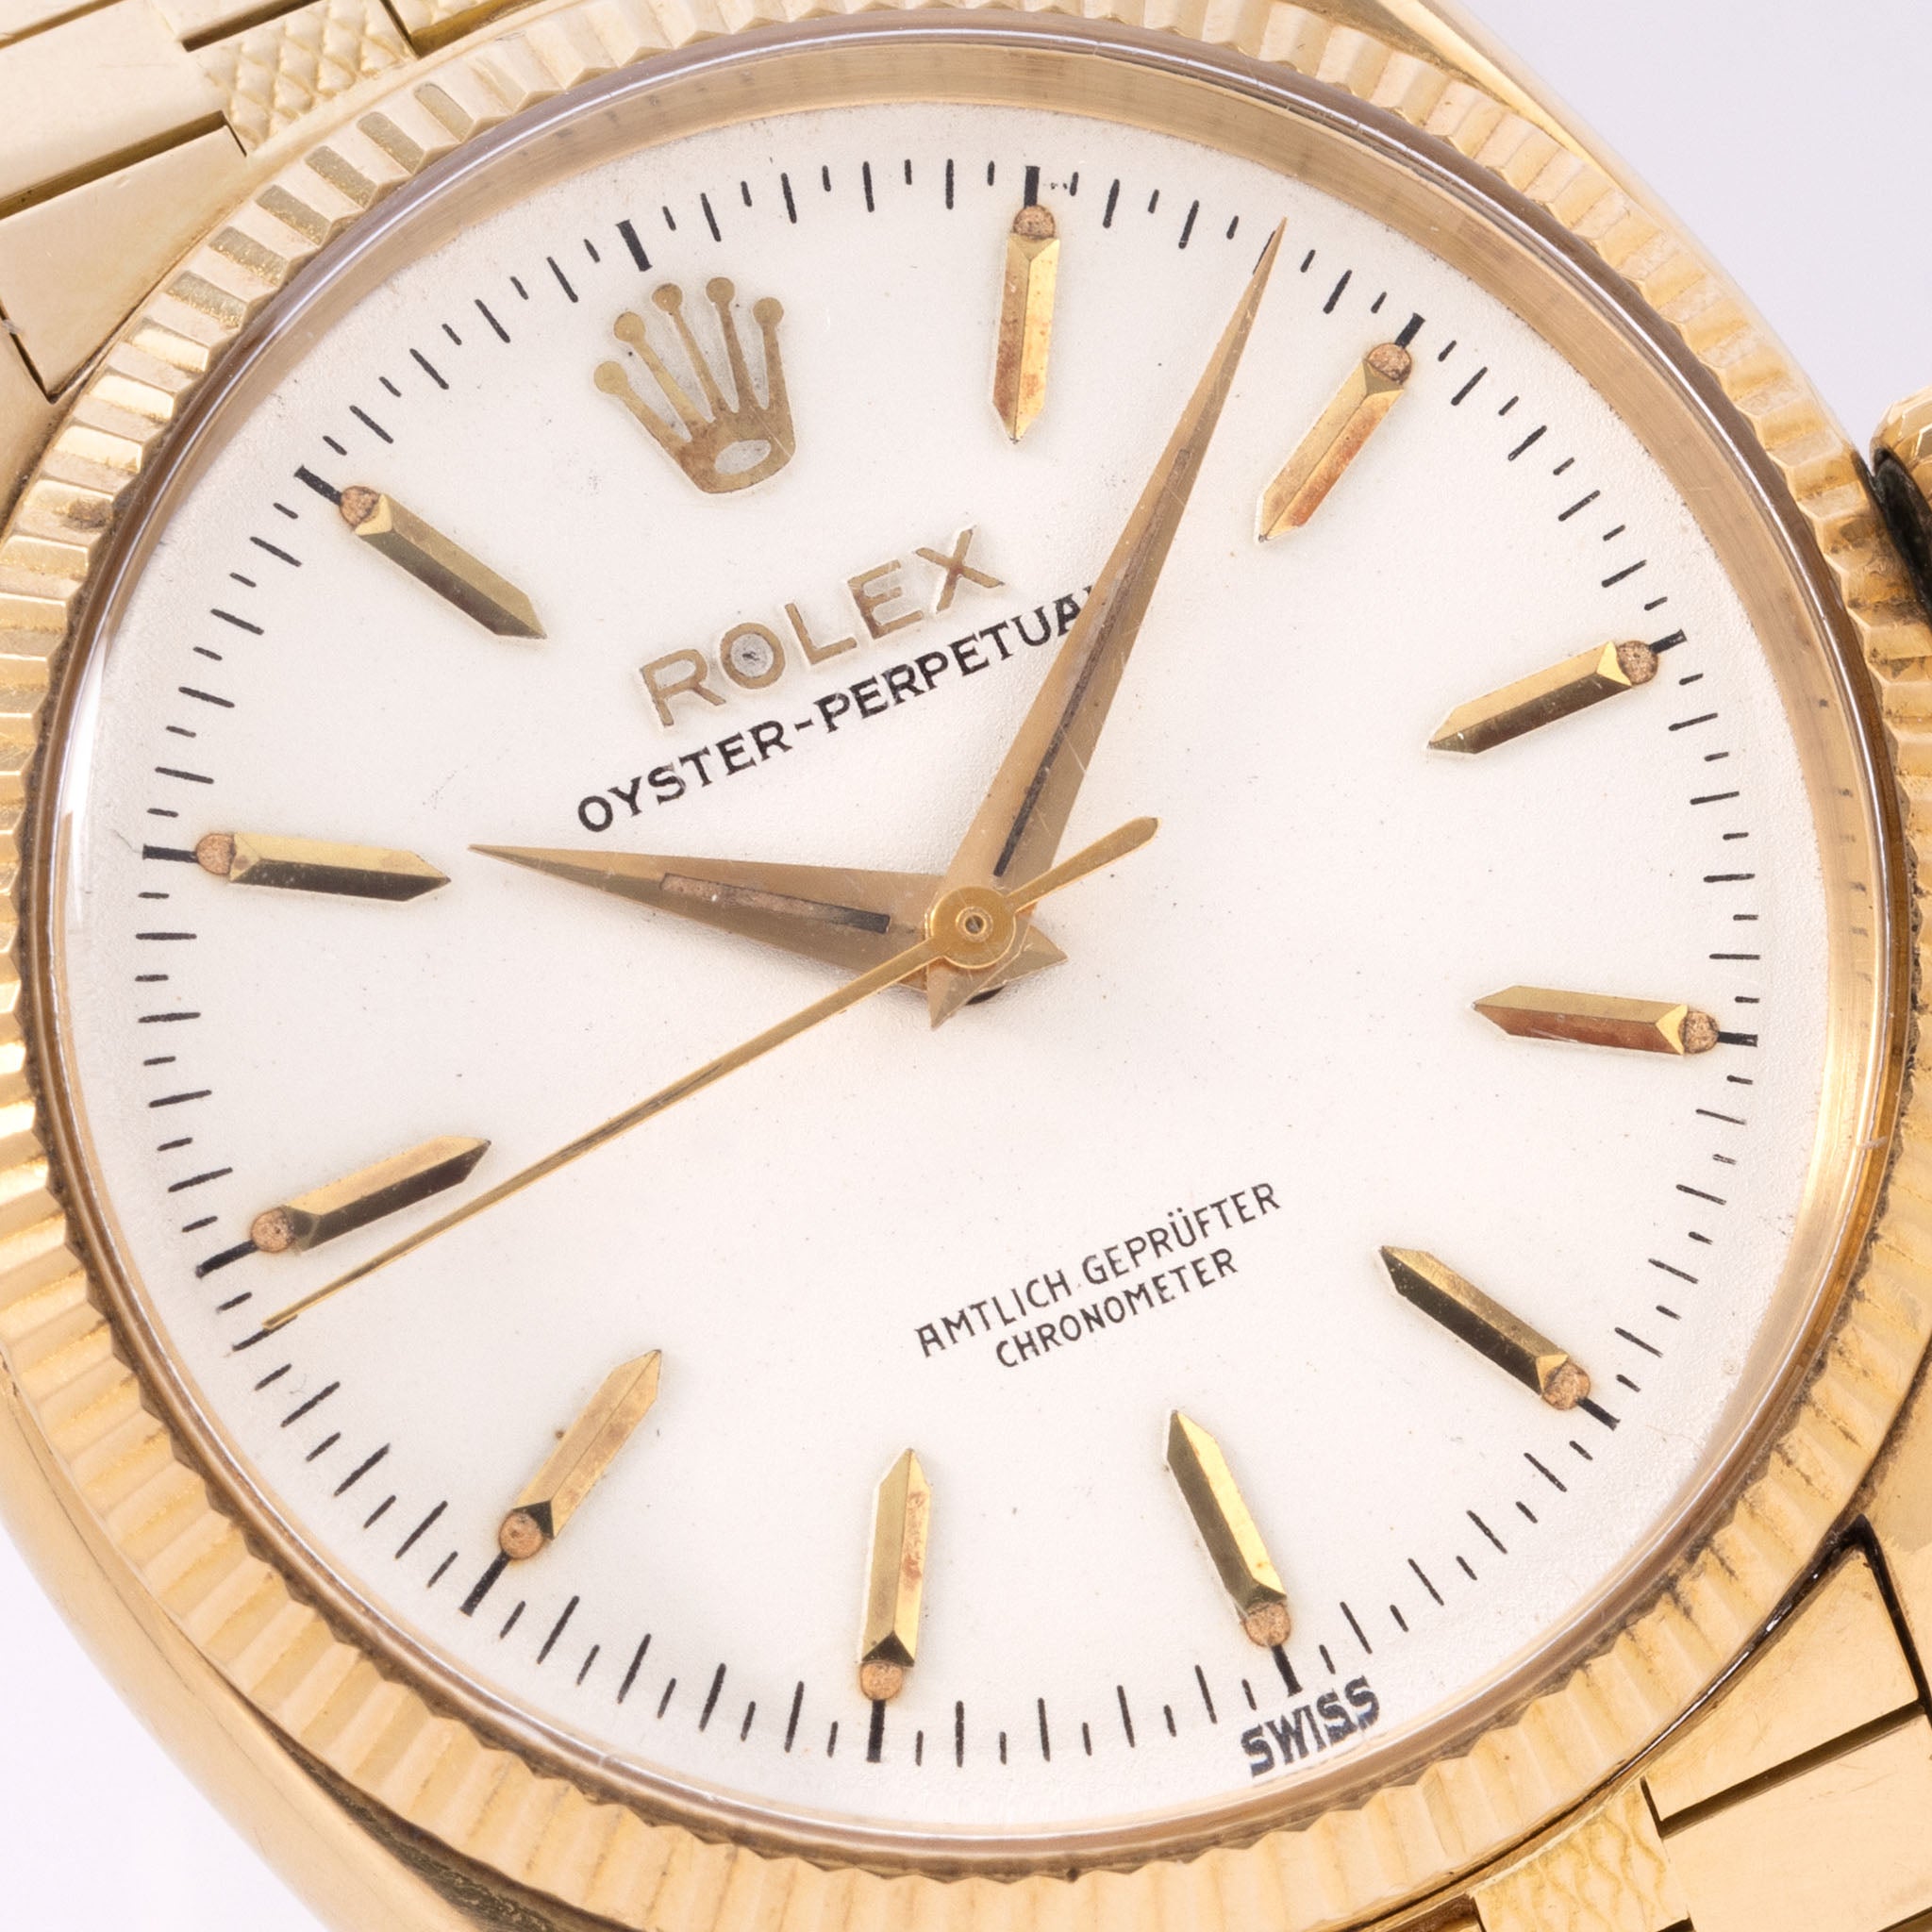 Rolex Oyster Perpetual 18kt Gold German Dial Brick Bracelet ref 6567